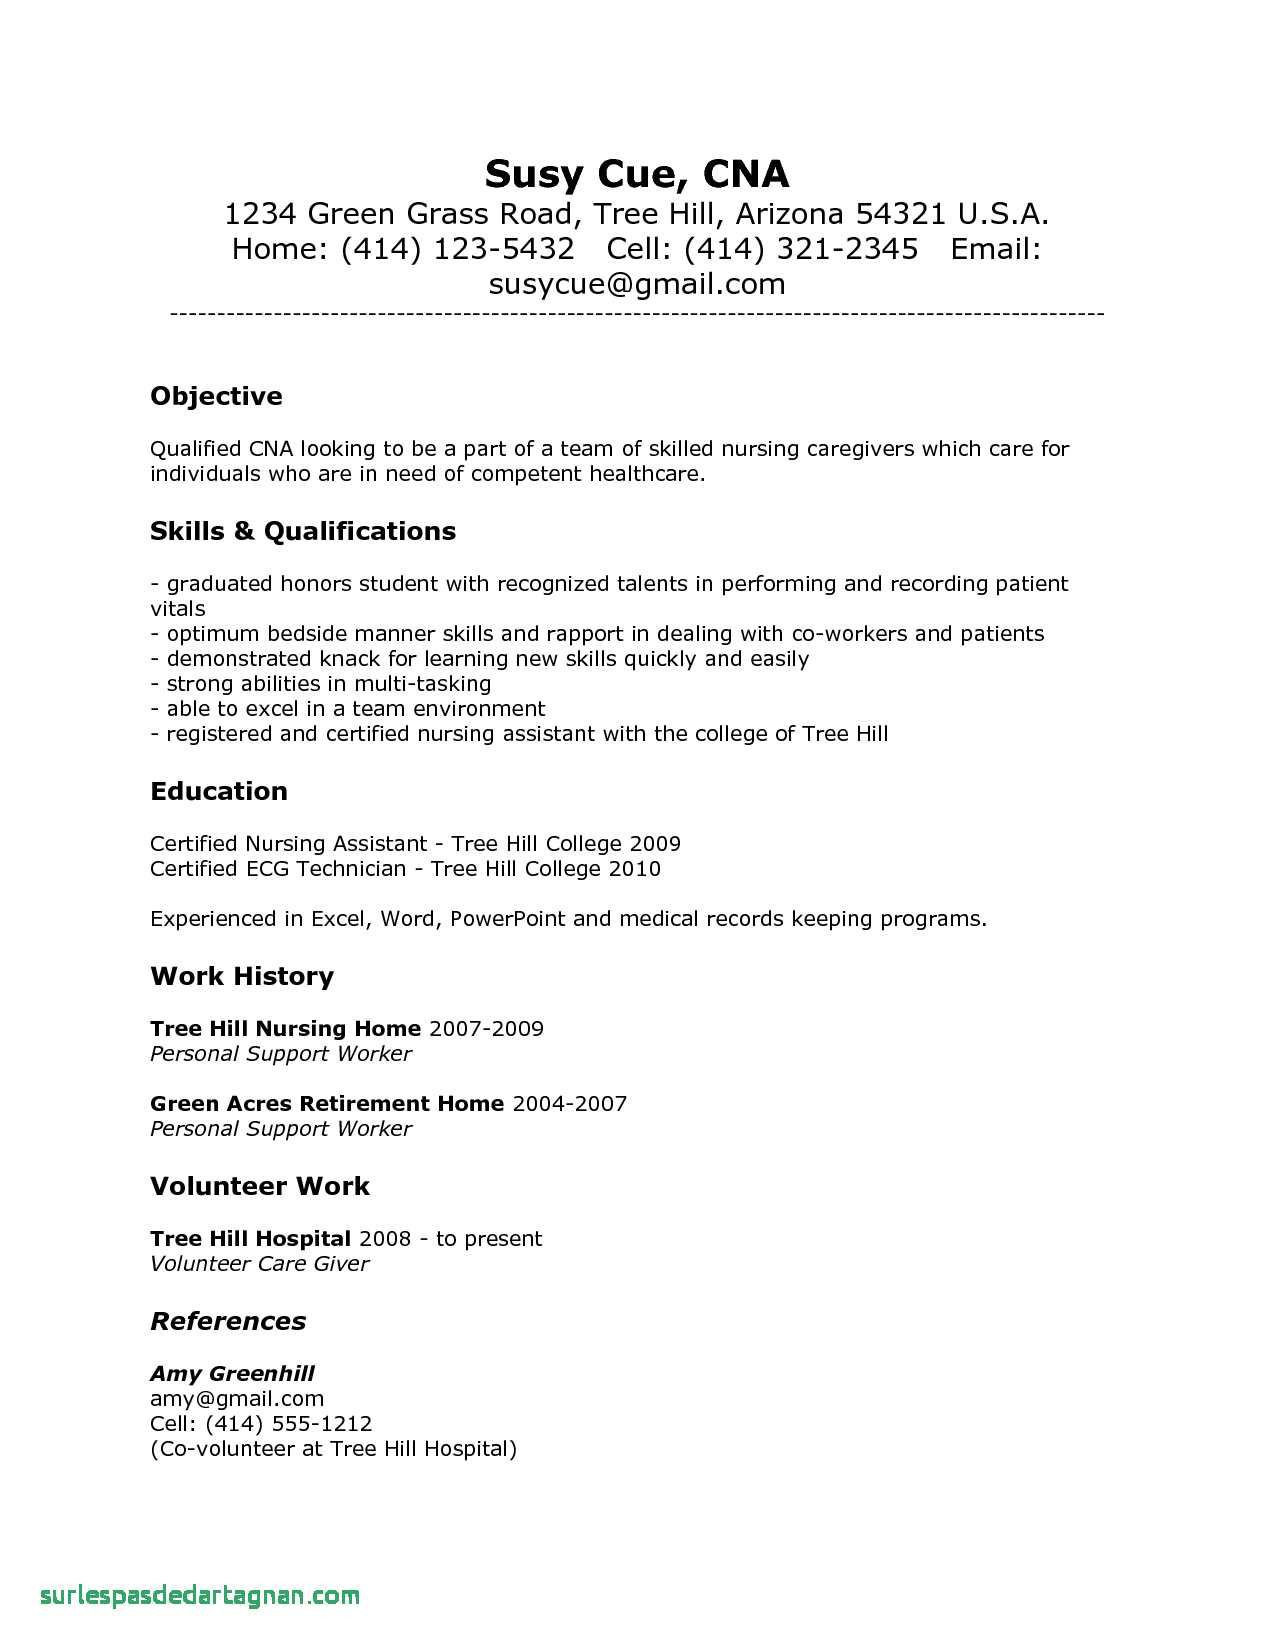 nursing student resume with no experienceml